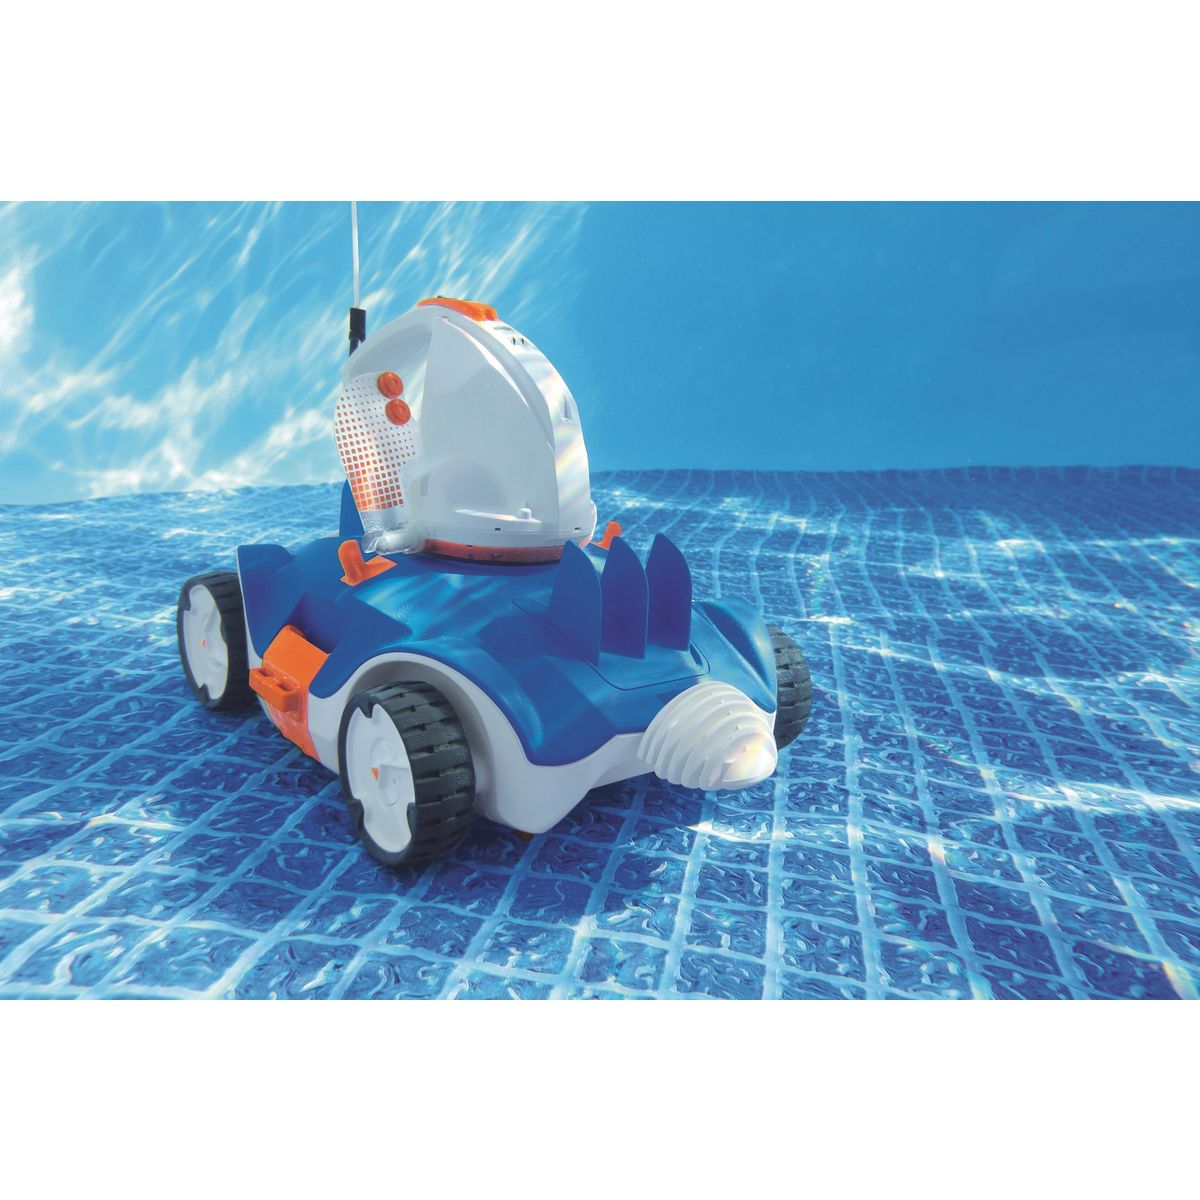 BESTWAY Robot aspirateur de piscine autonome Aquatronix